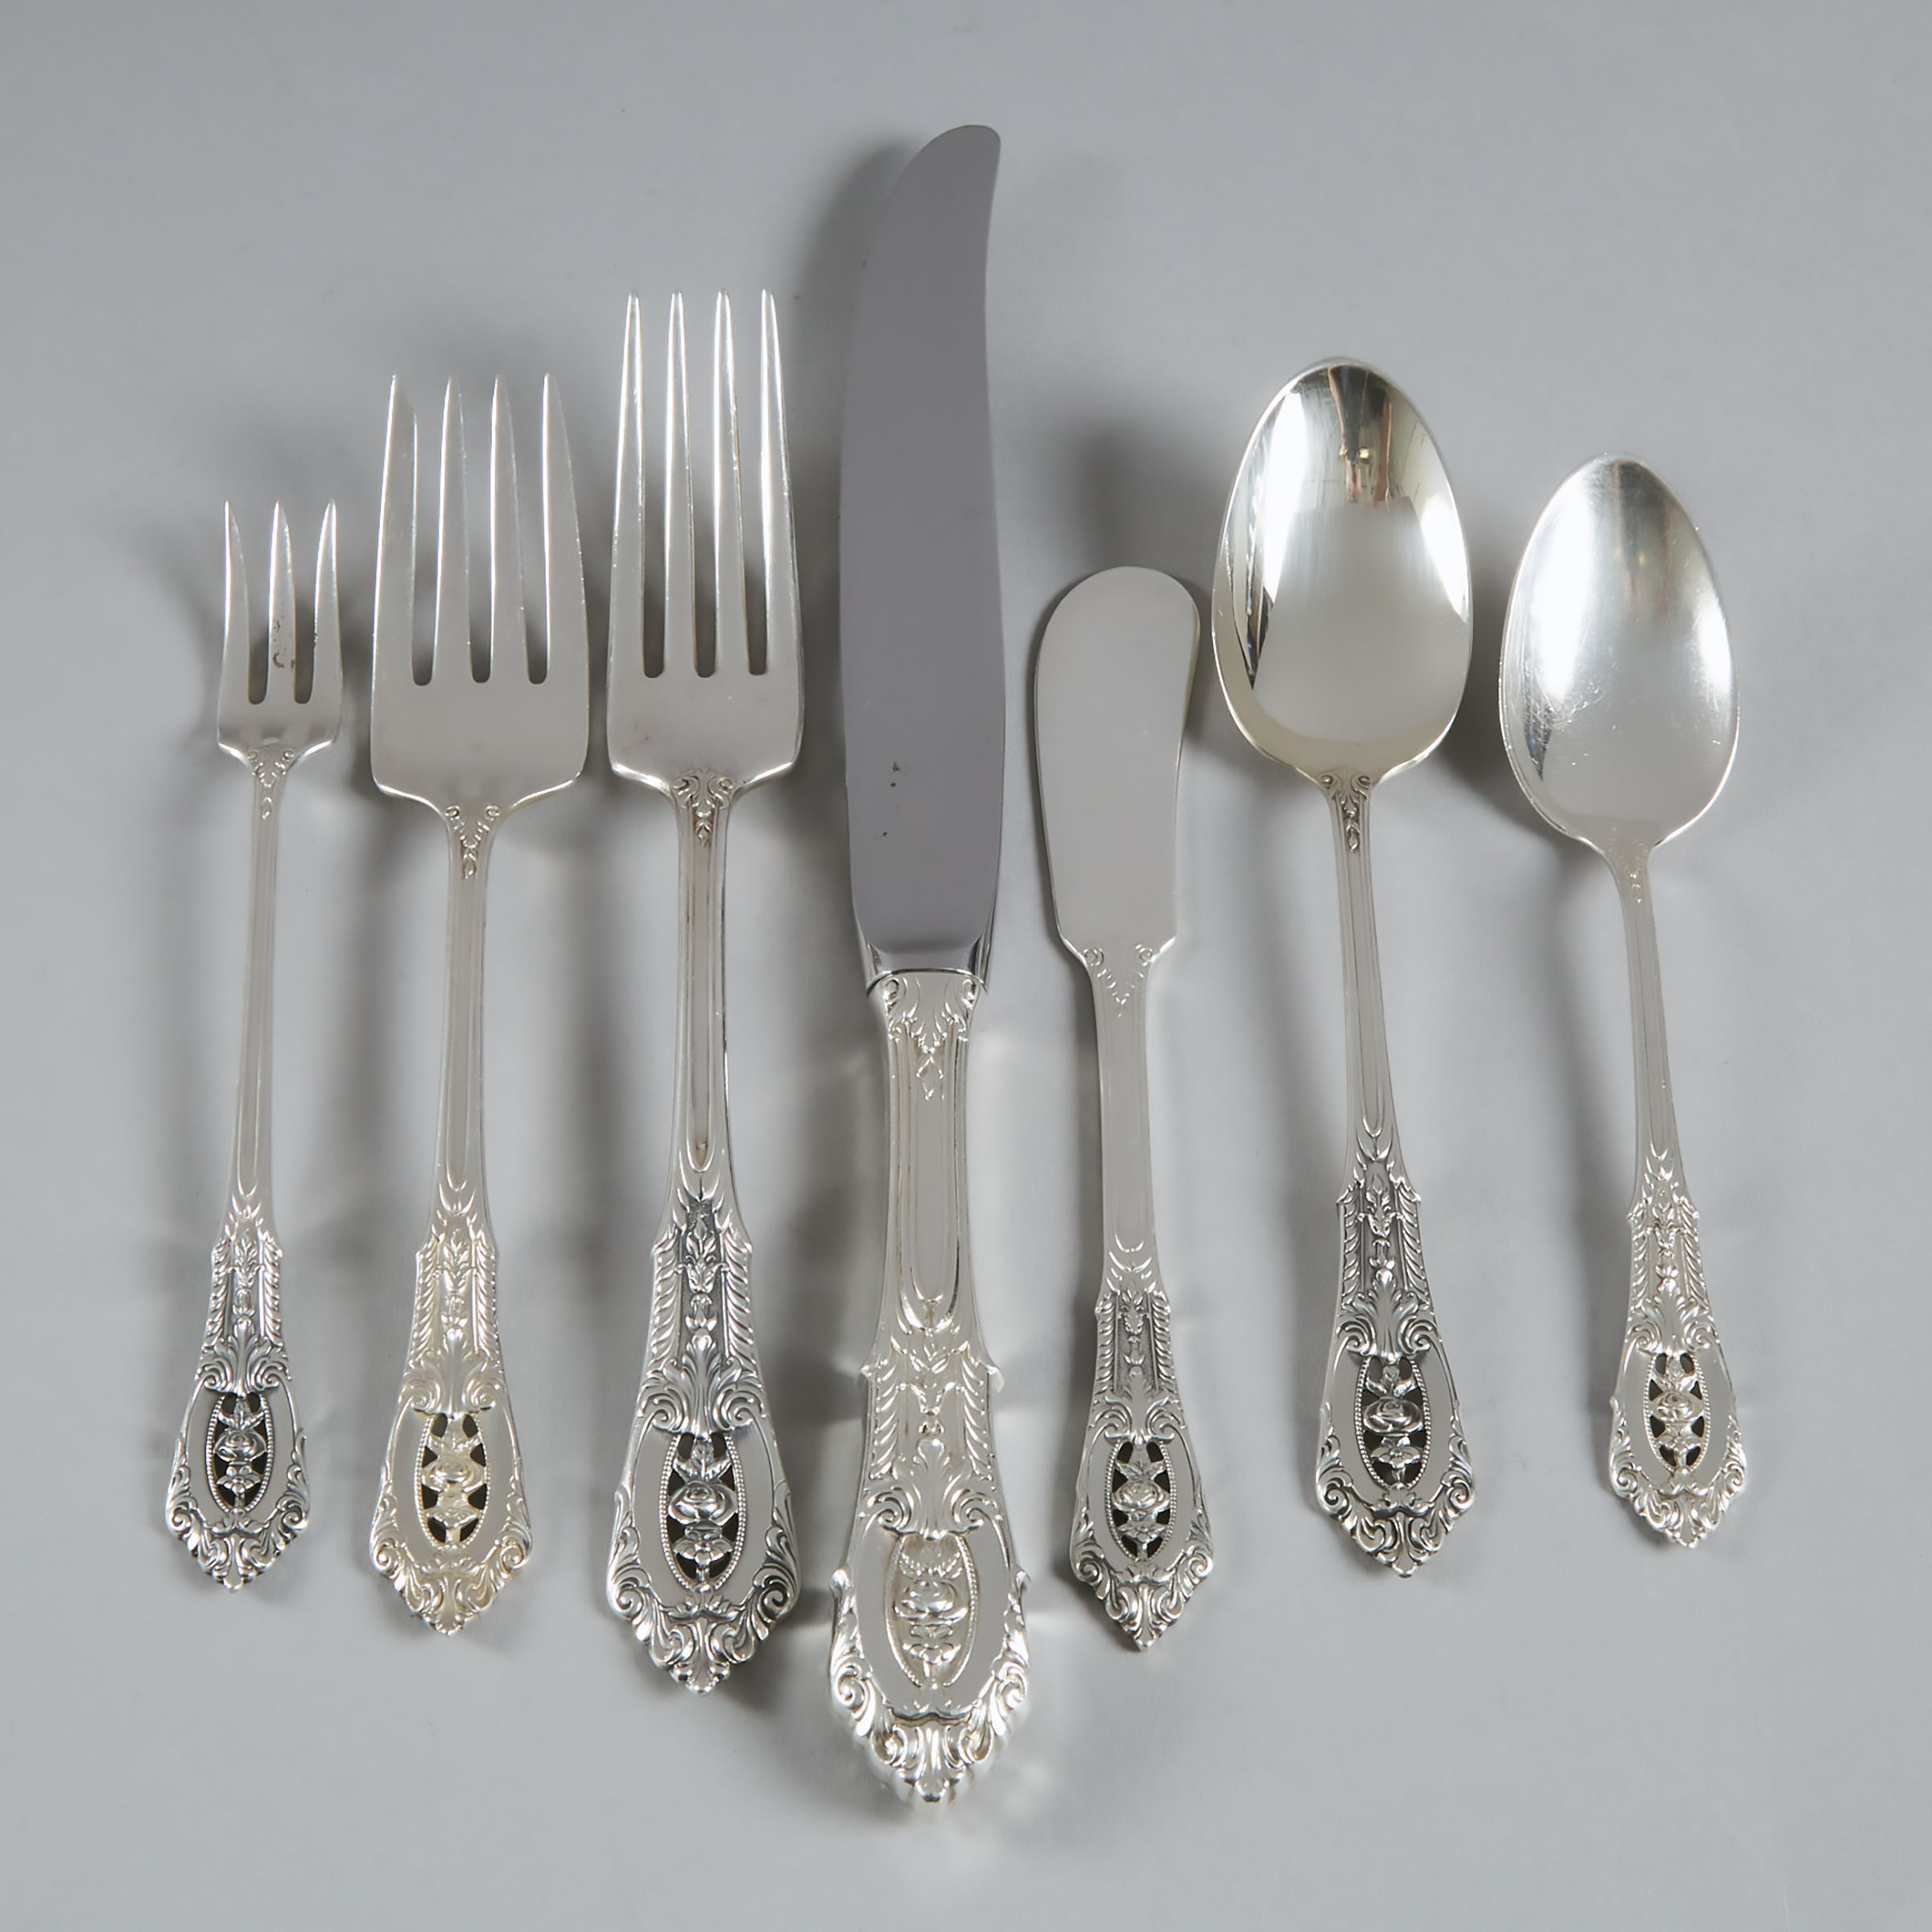 American Silver ‘Rosepoint’ Pattern Flatware, Wallace Silversmiths, Wallingford, Ct., 20th century